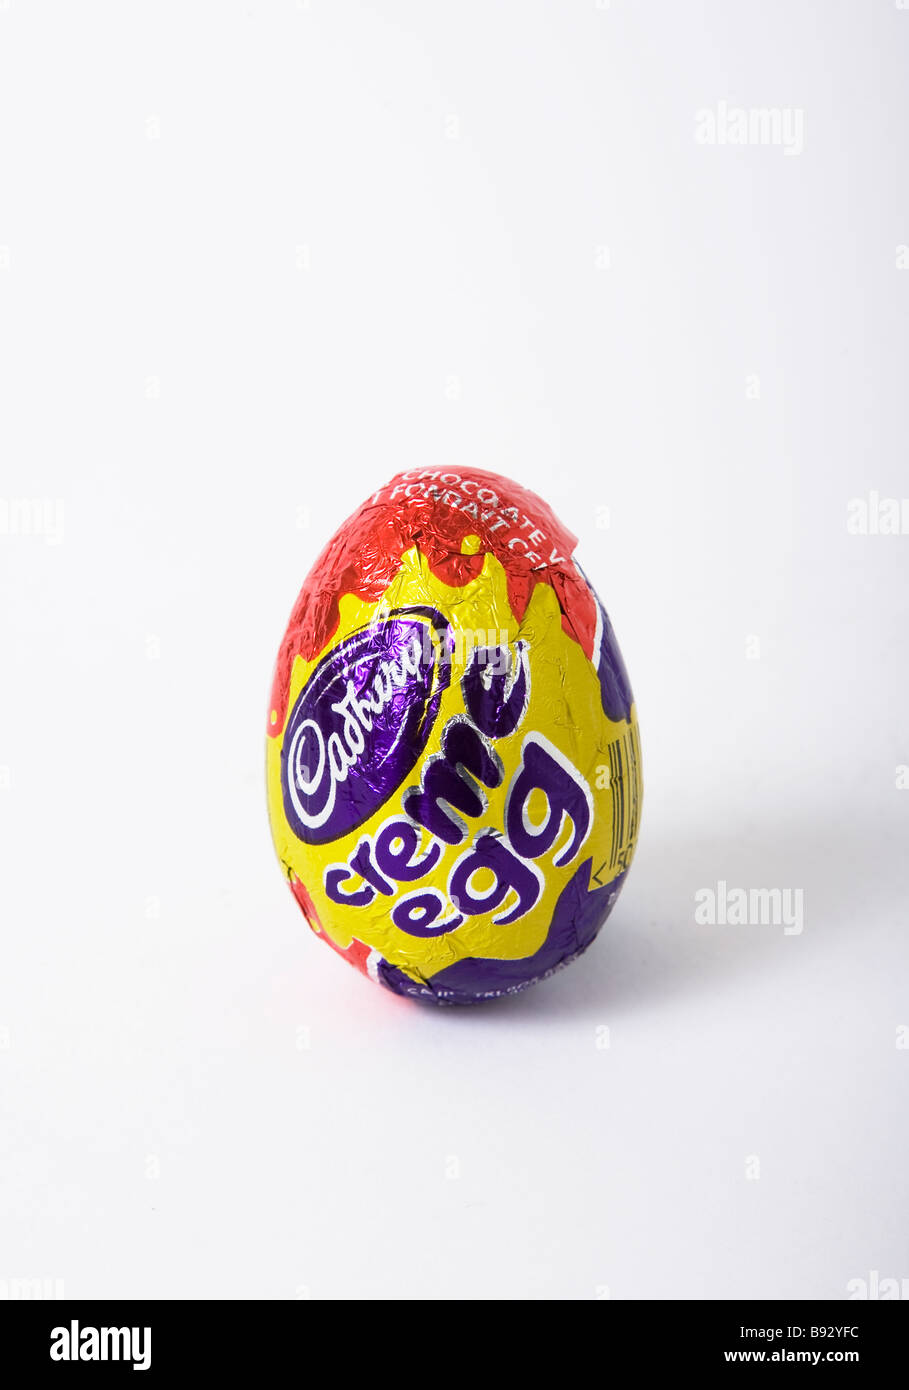 cadburys cadbury's cream creme egg Stock Photo